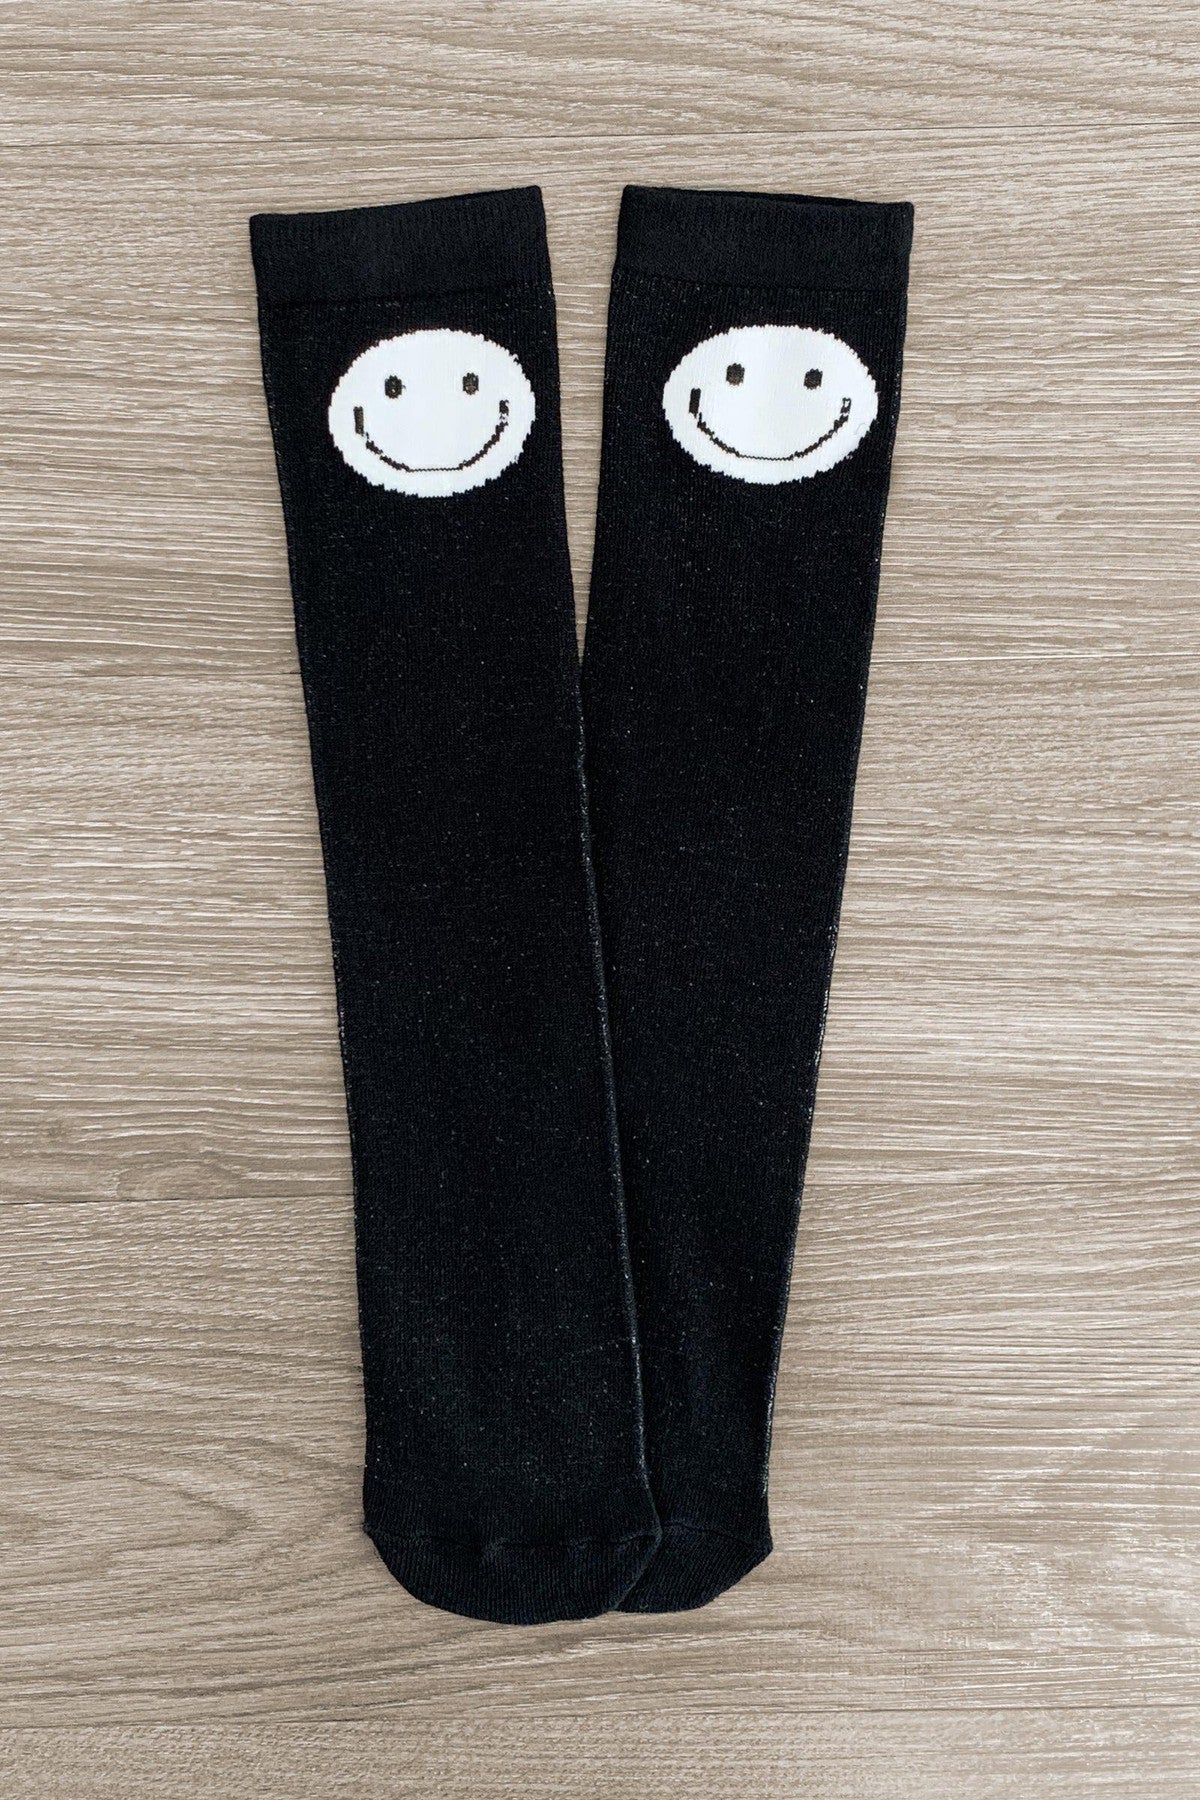 Black Smiley Face Socks | Sparkle In Pink